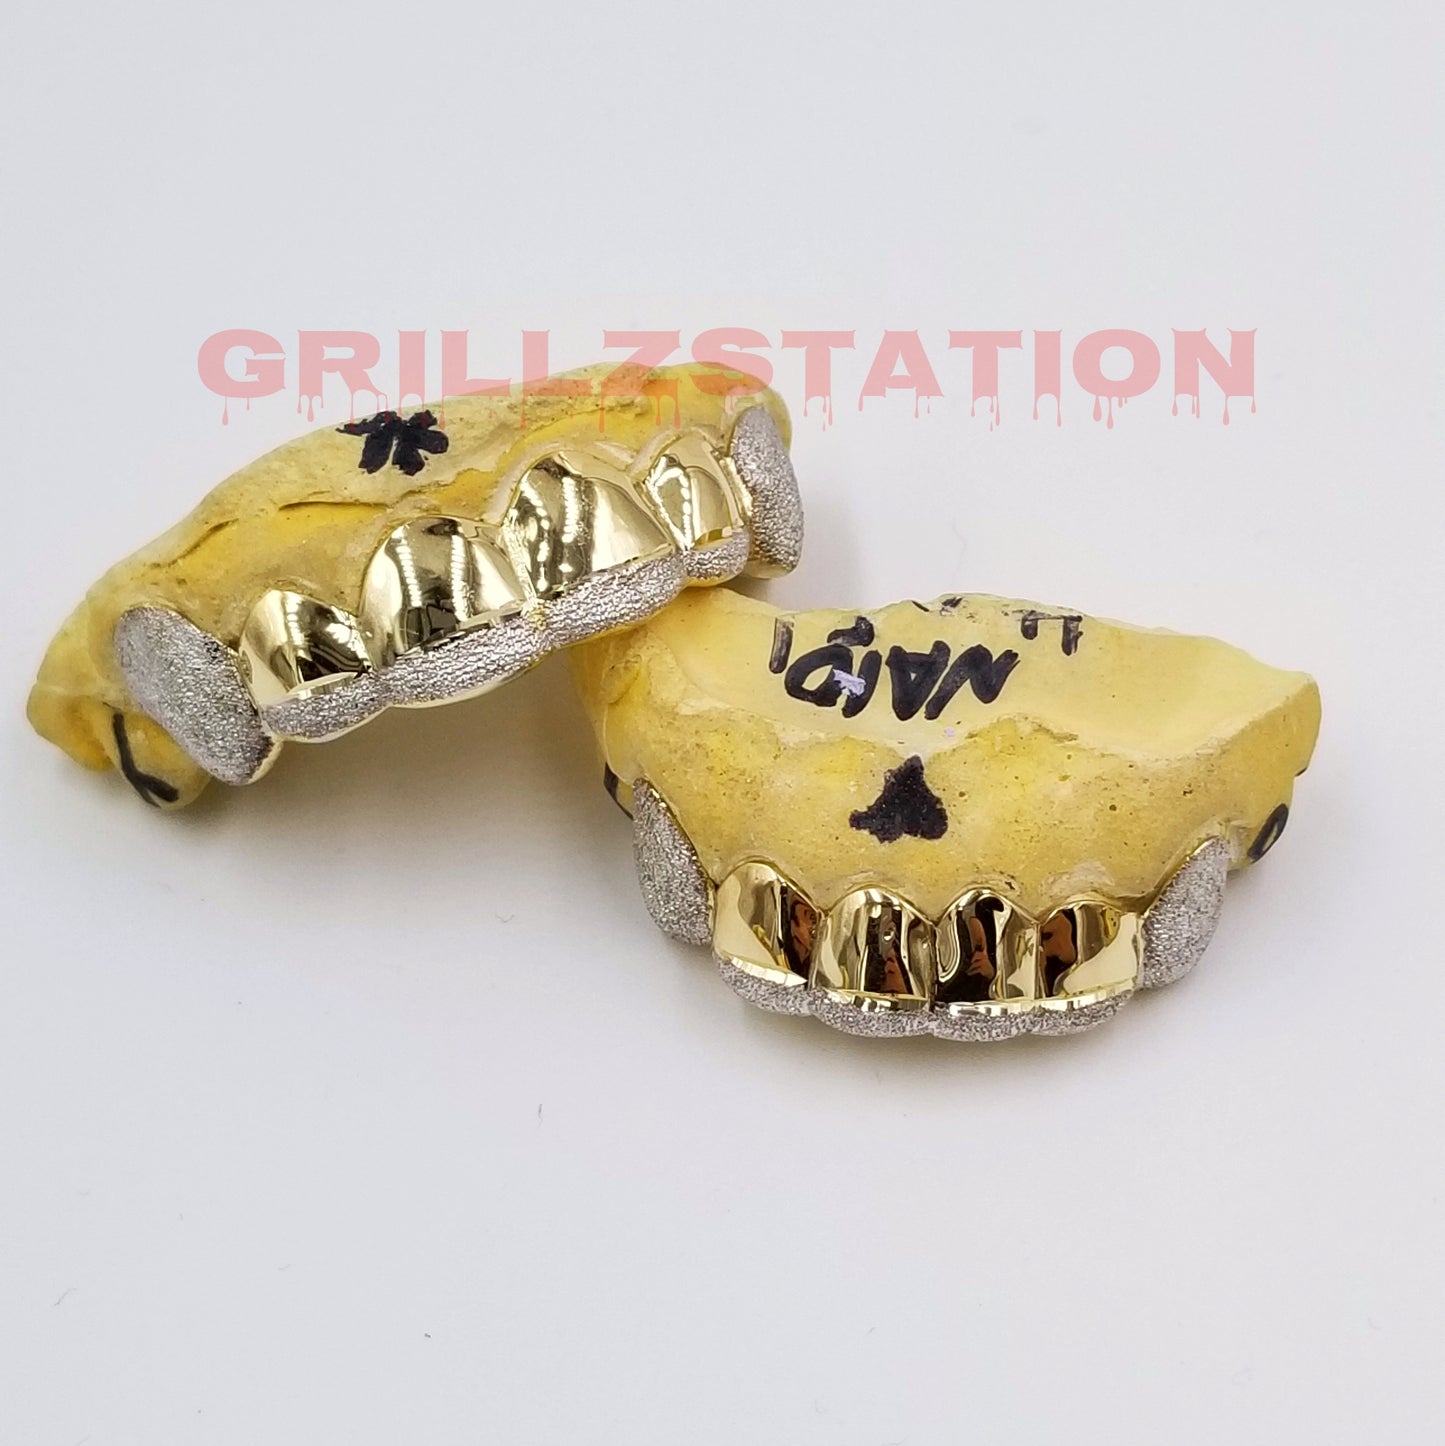 Custom Grillz with Diamond Dust on tip - GRILLZSTATION 